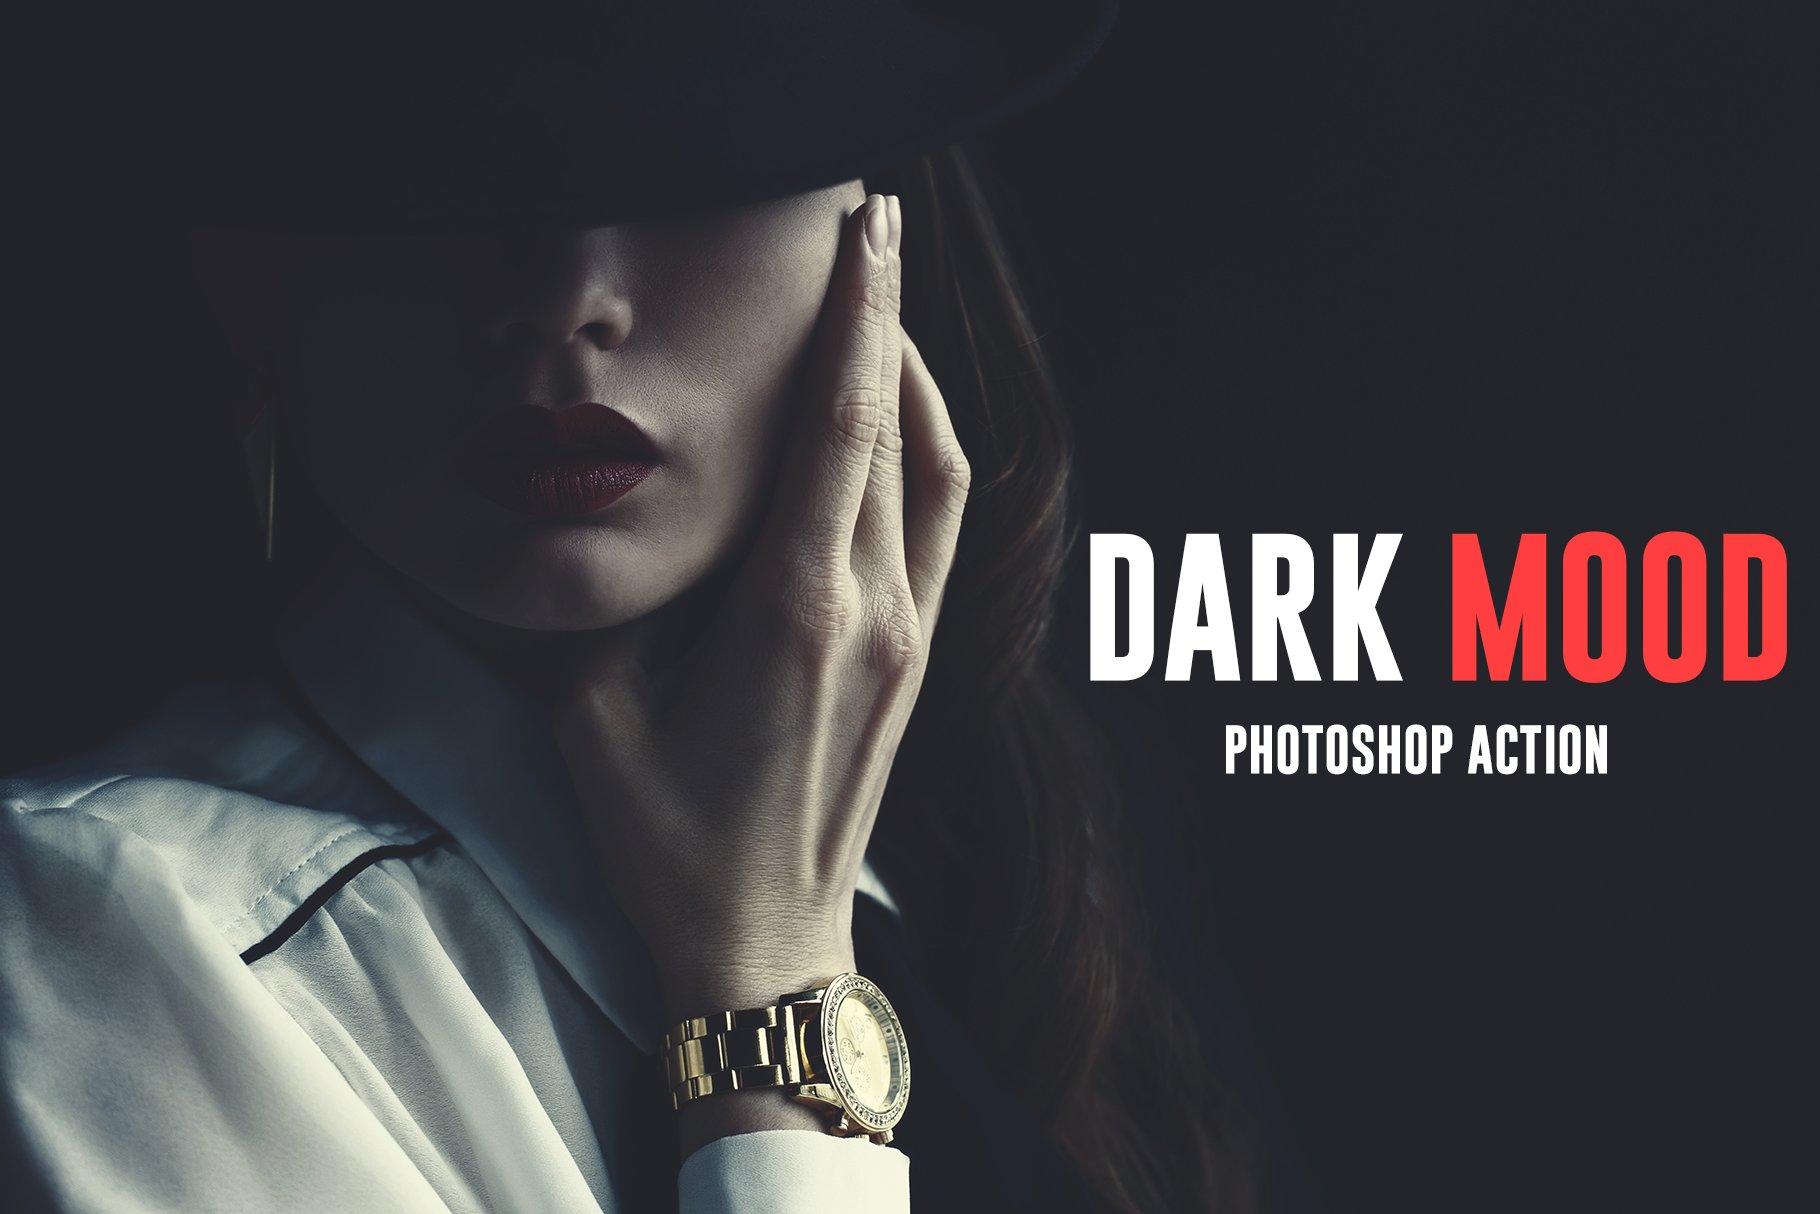 Dark Mood Photoshop Actioncover image.